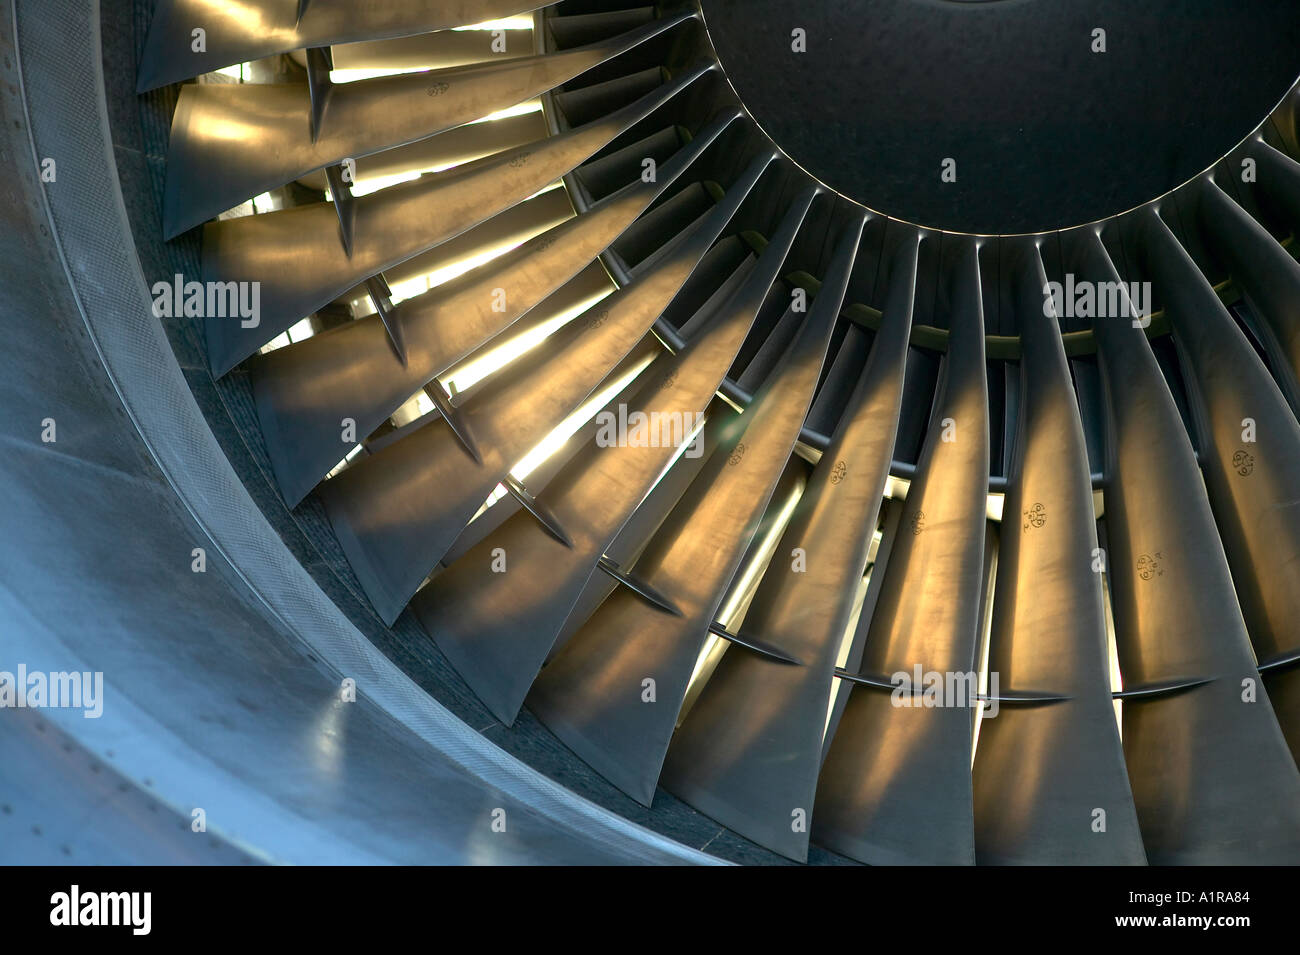 tight view of passenger jet engine intake blades Stock Photo